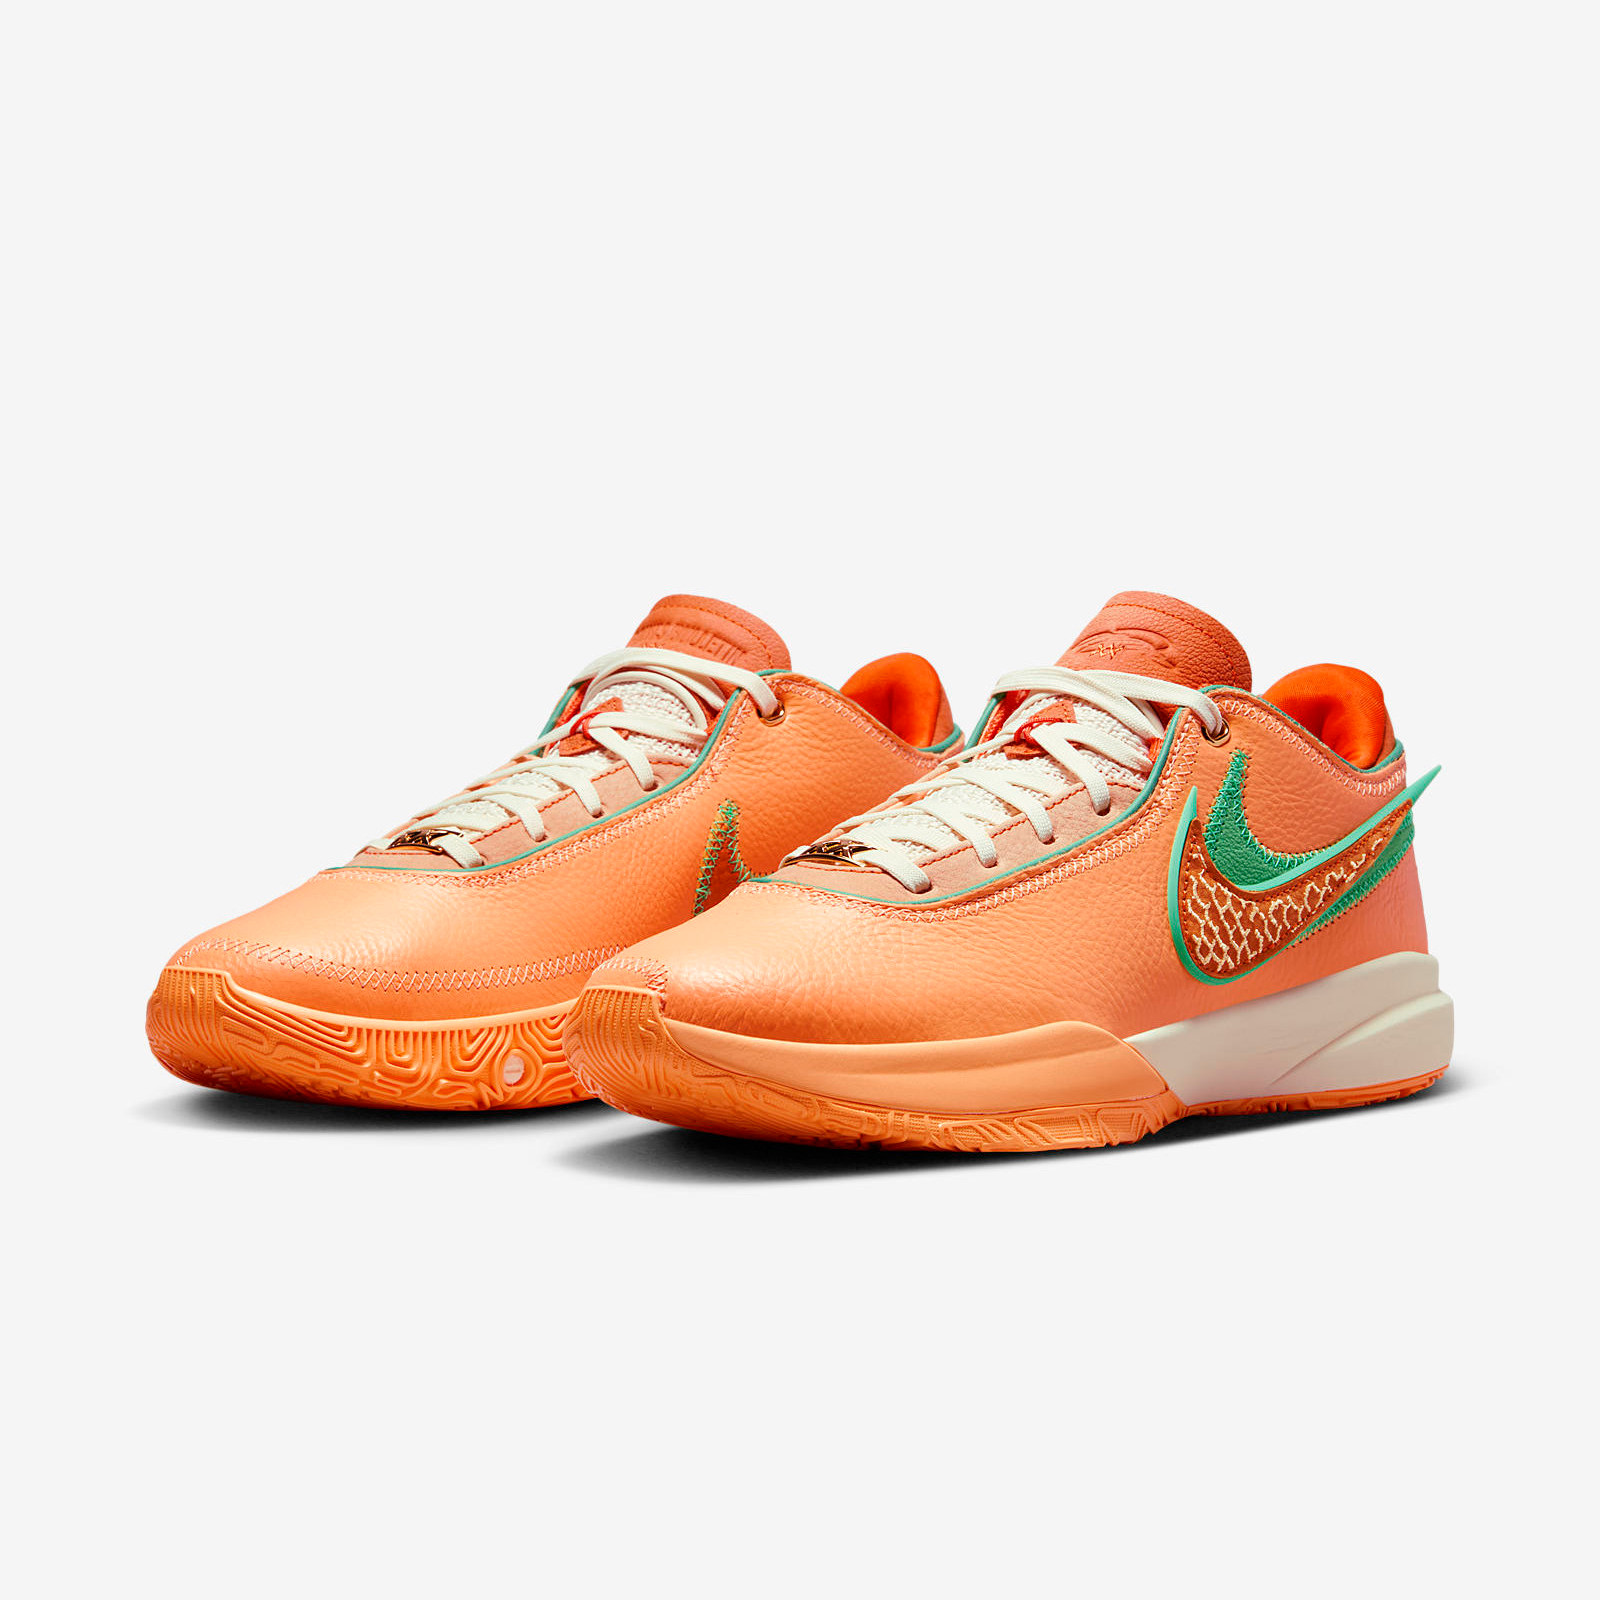 FAMU x Nike LeBron 20
« Peach Cream »